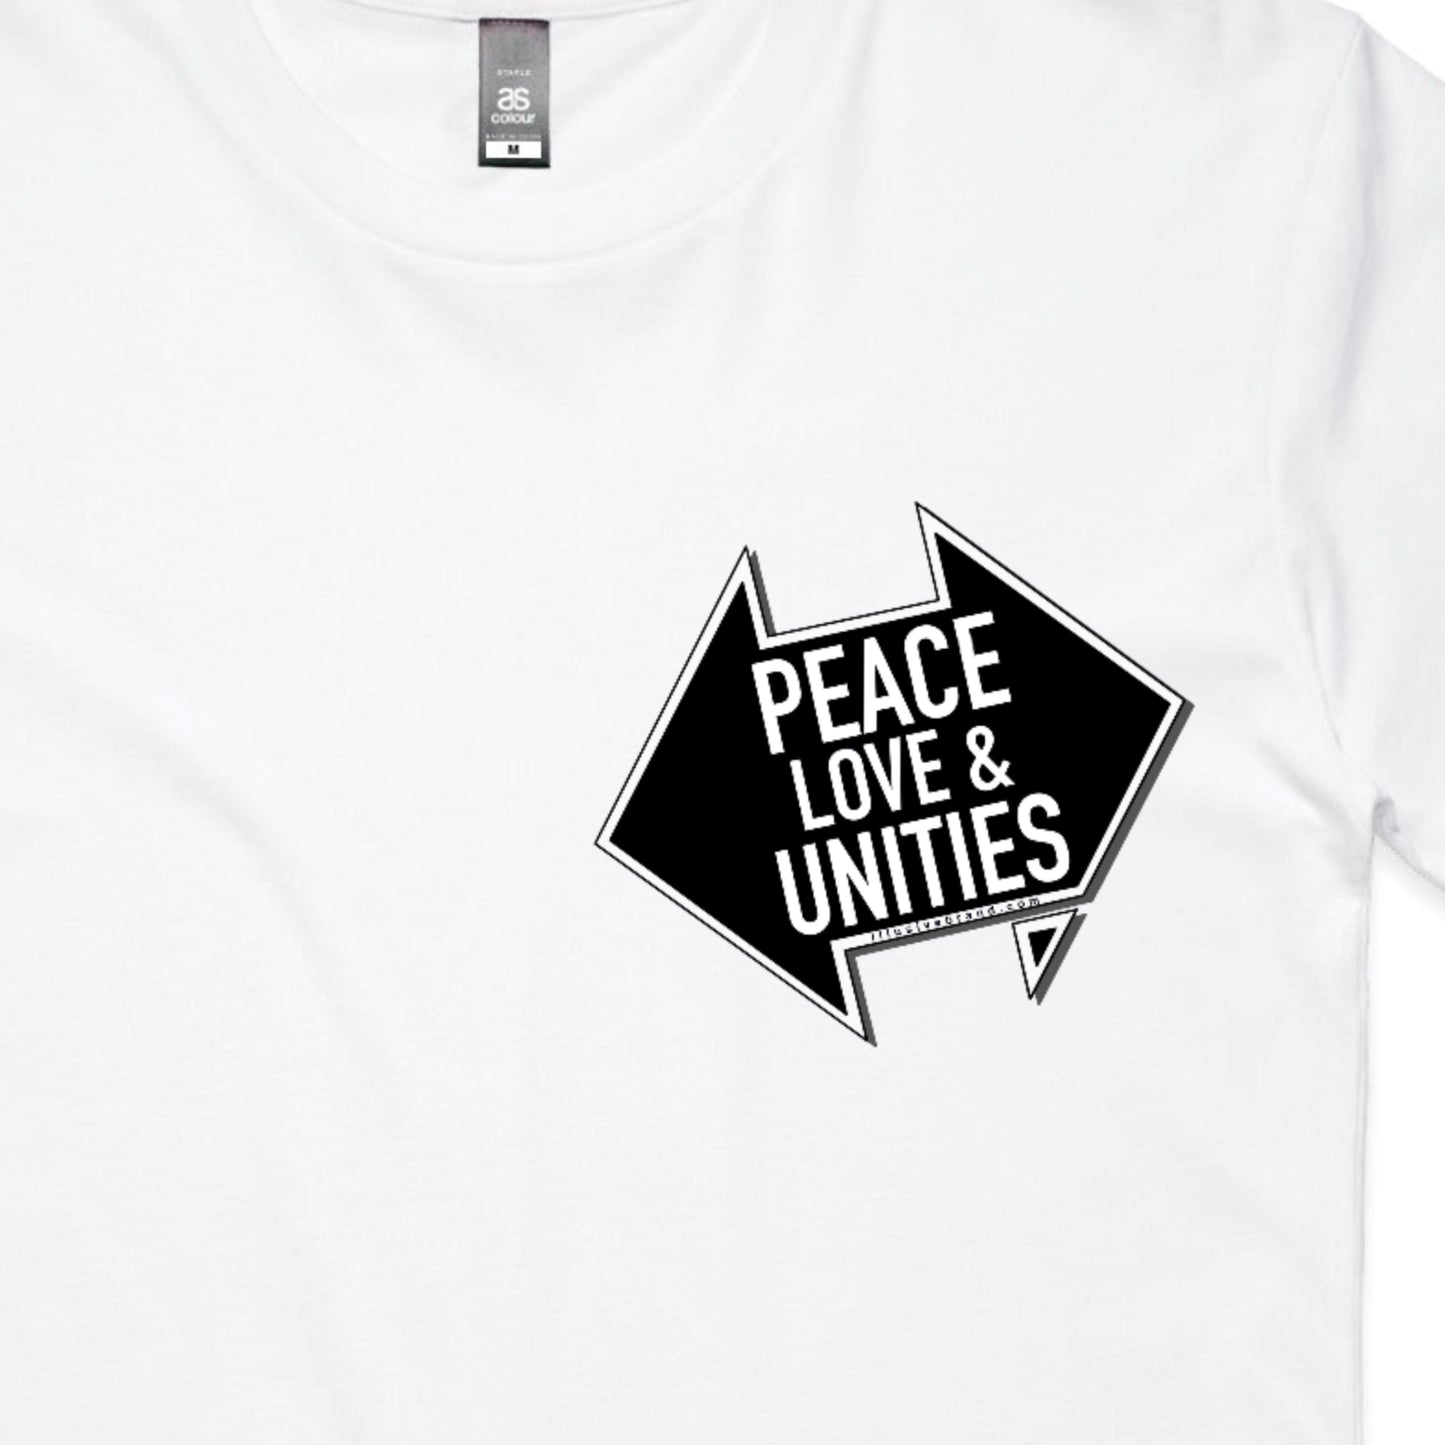 PEACE, LOVE & UNITIES - skiphop logo